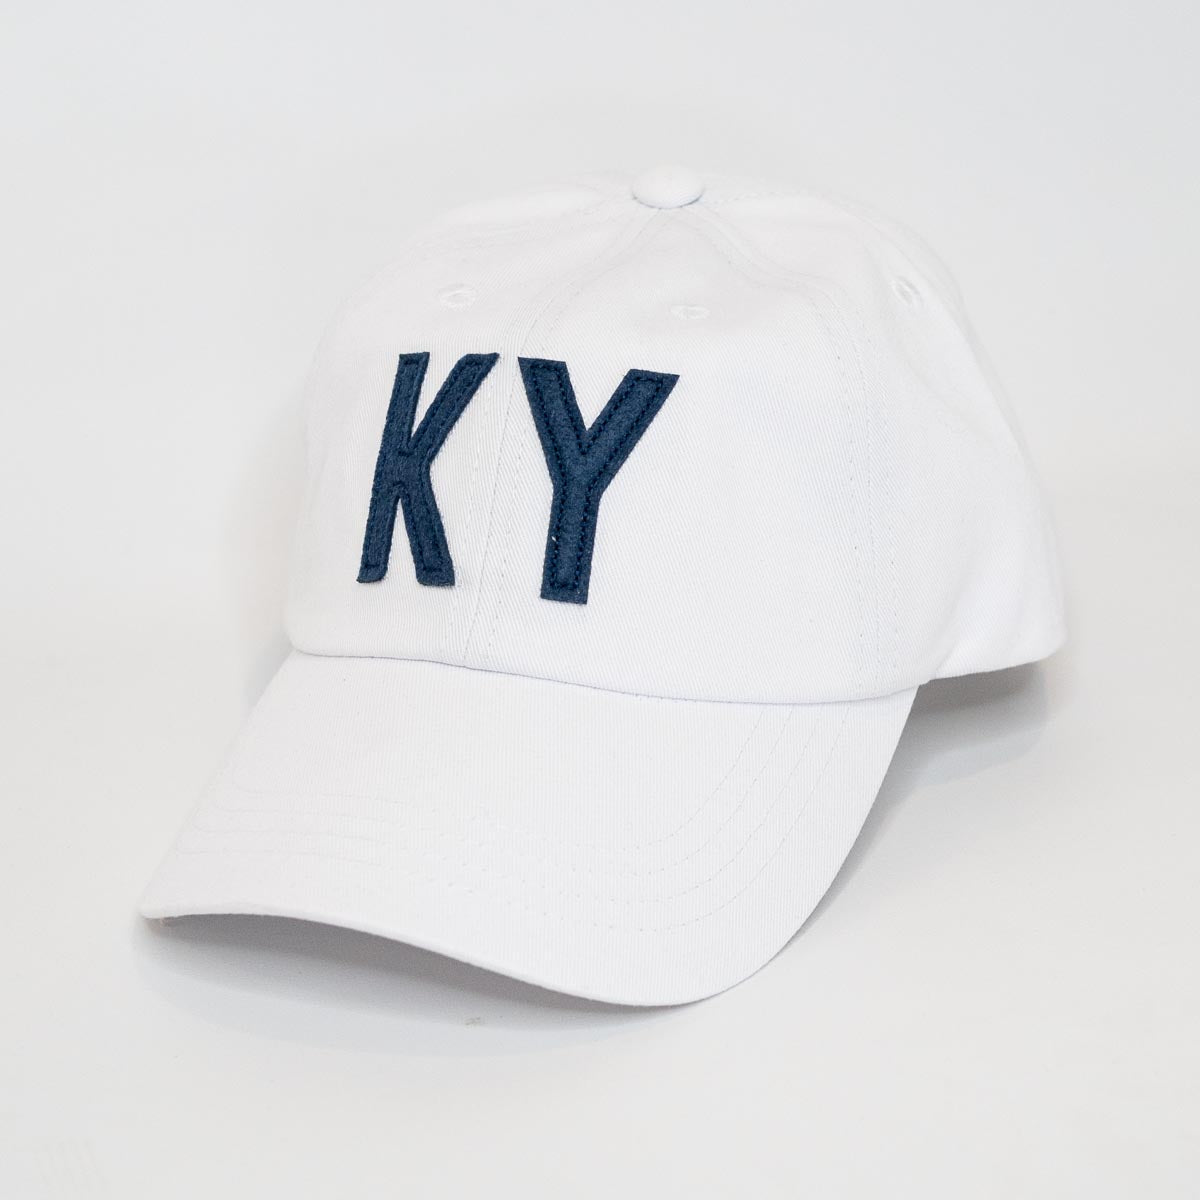 Baseball Caps for sale in Louisville, Kentucky